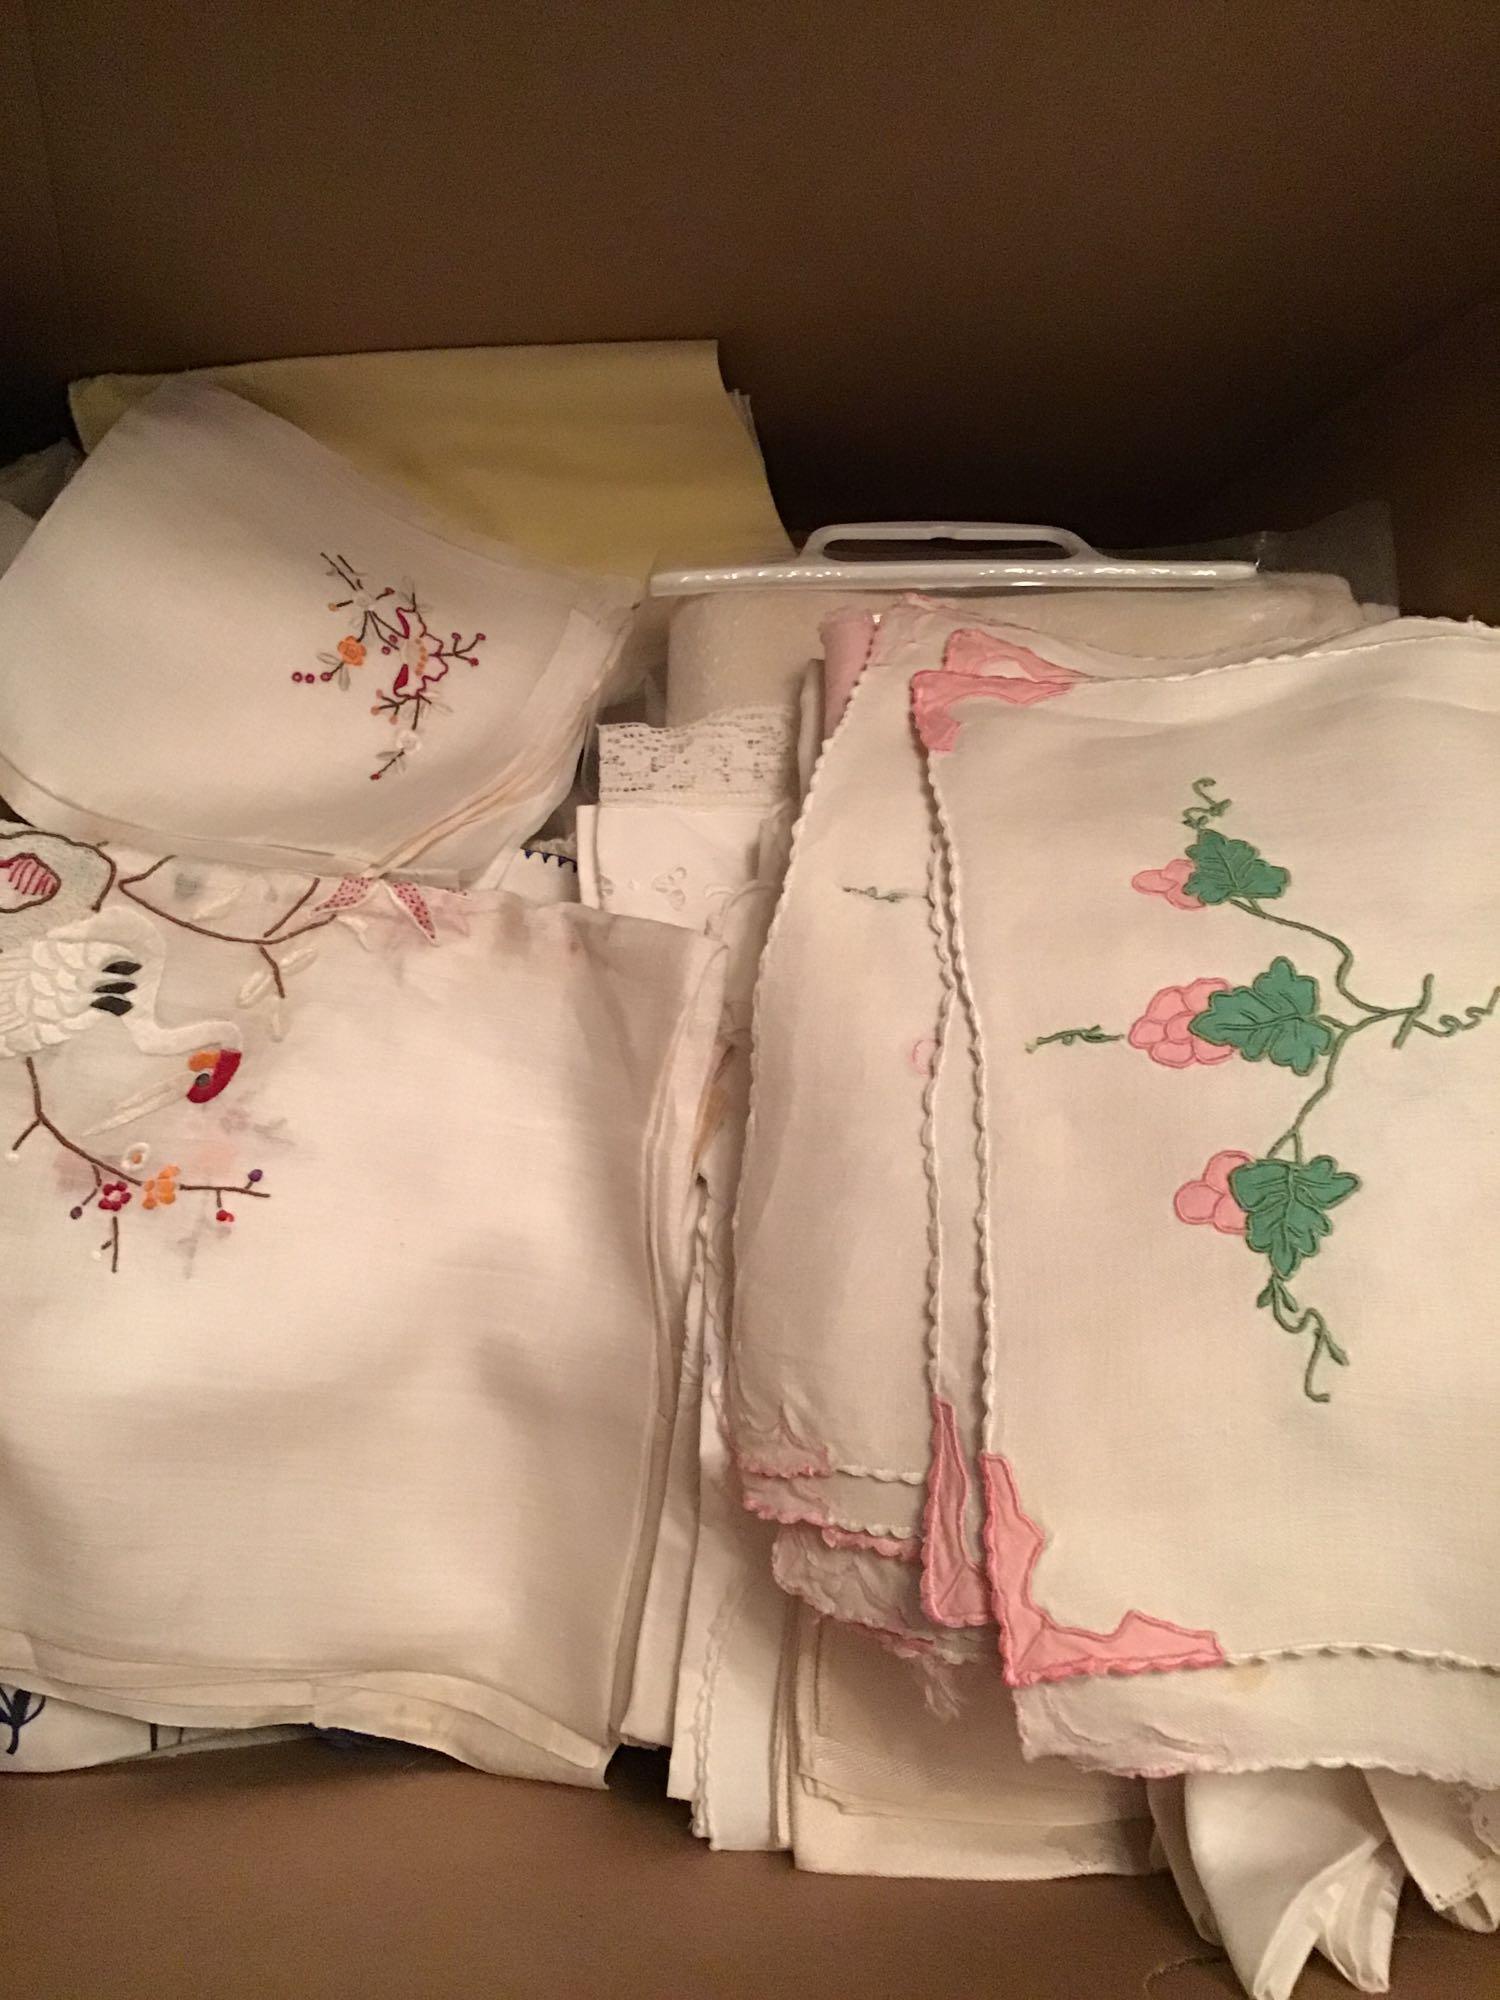 Large box lace tablecloths napkins